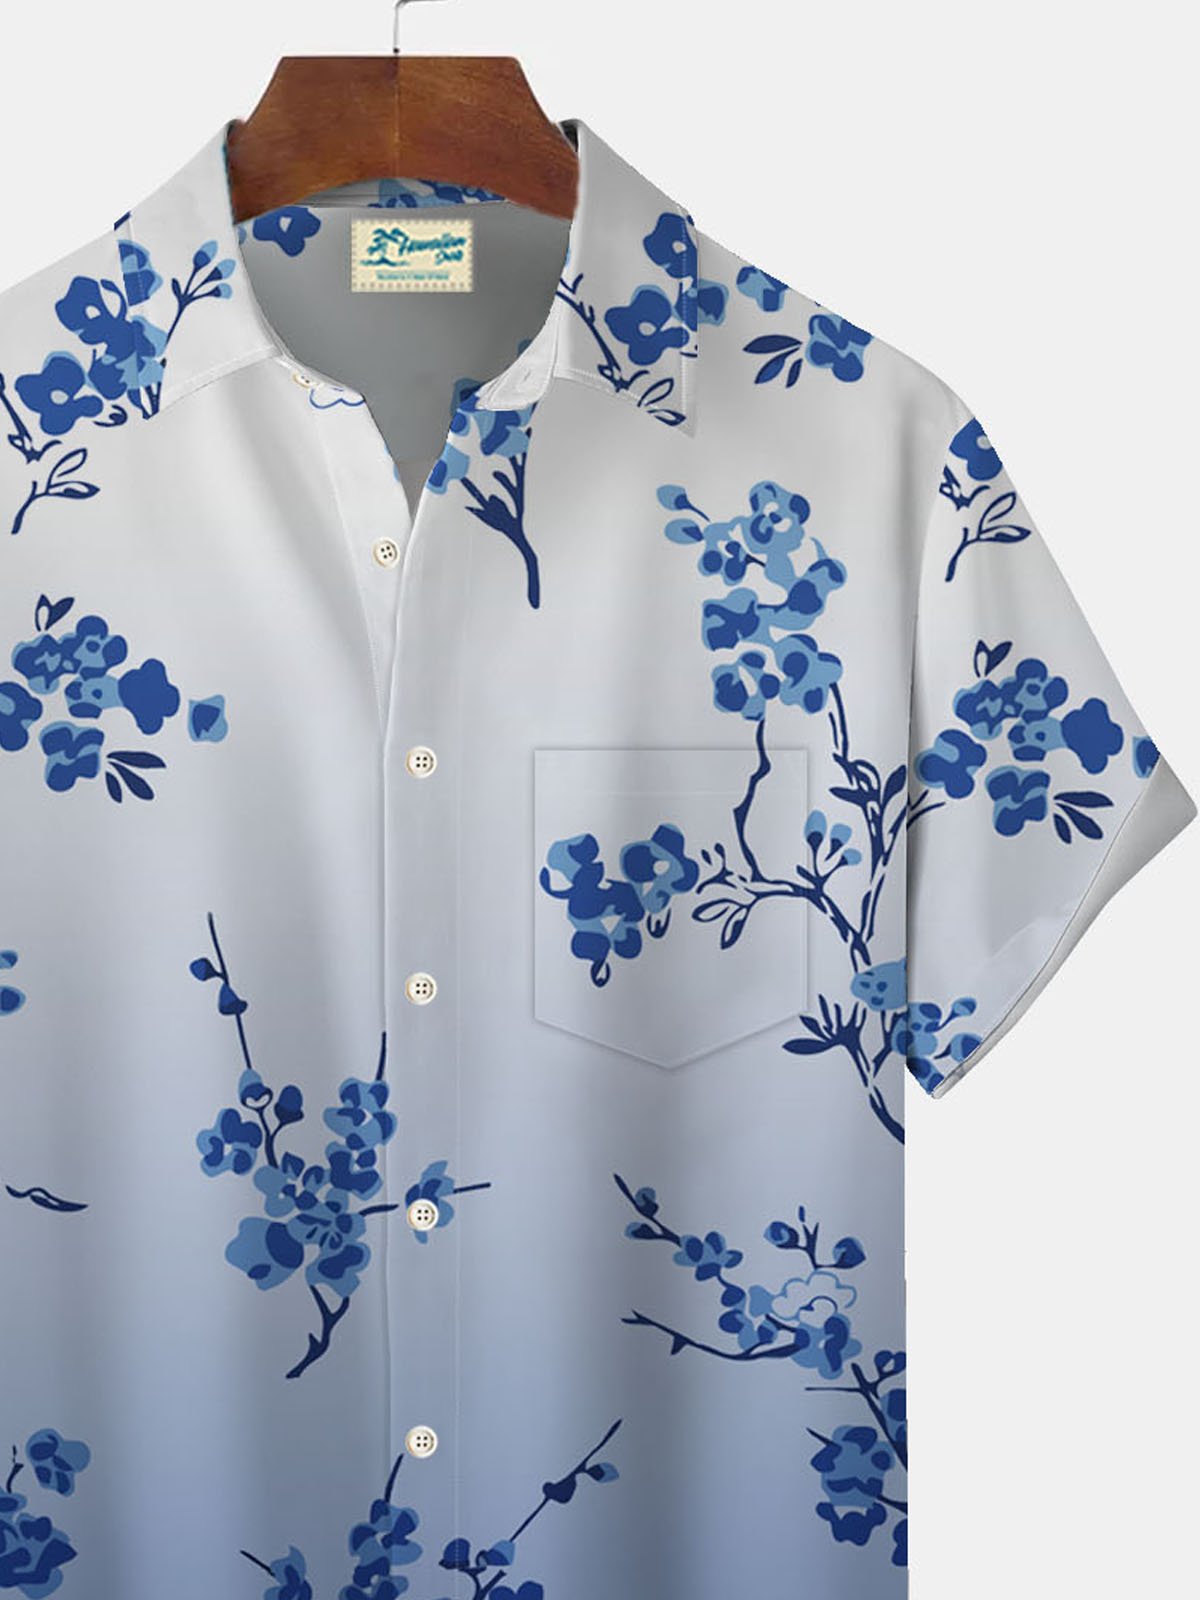 Royaura Hawaiian Gradient Floral Print Men's Button Down Pocket Shirt